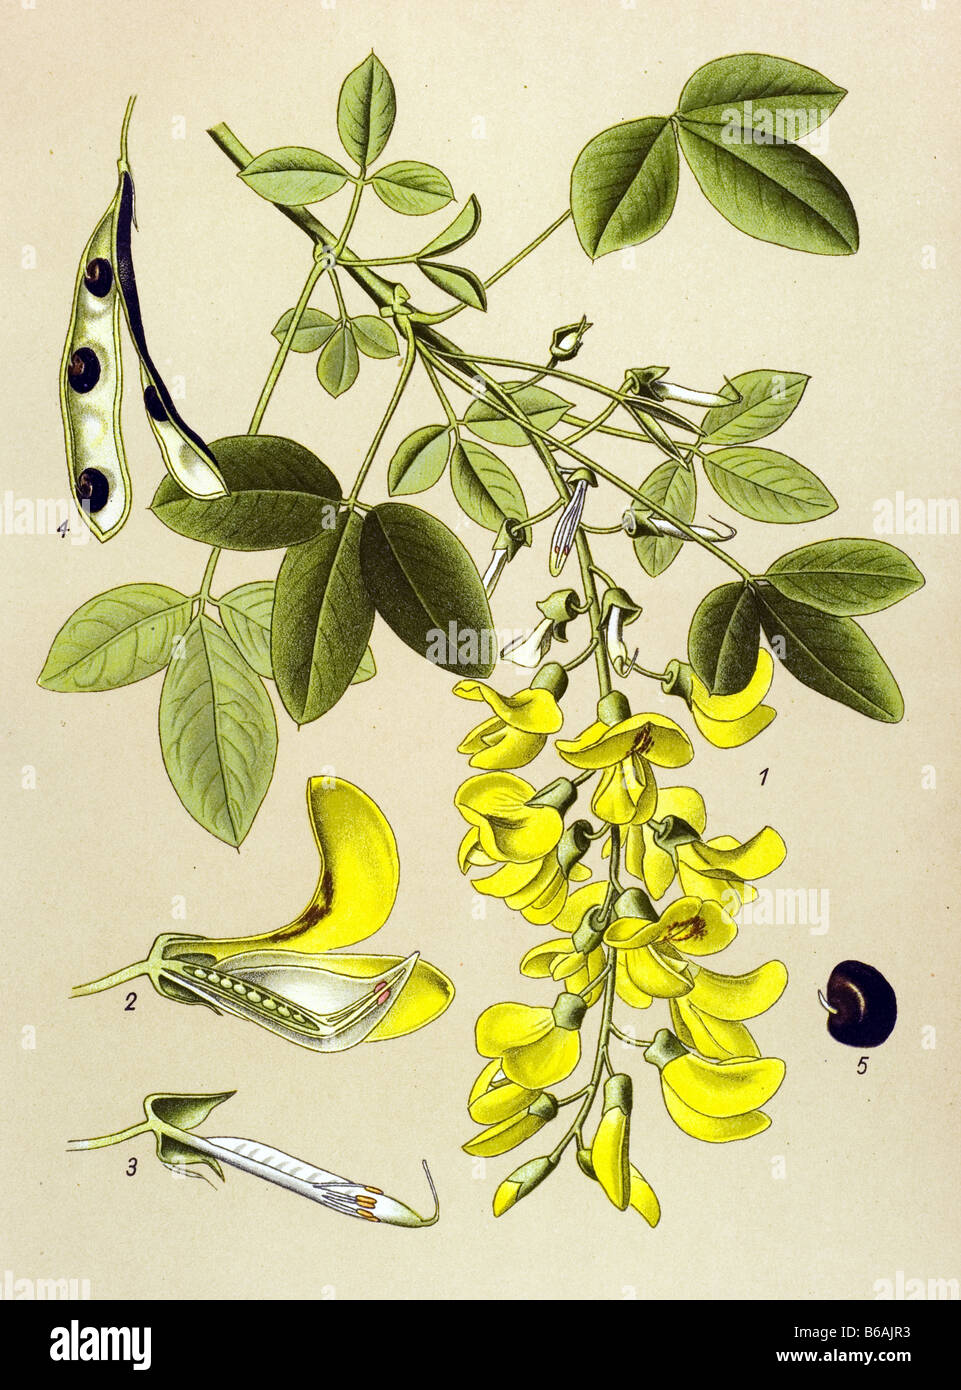 Laburnum anagyroides poisonous plants illustrations Stock Photo